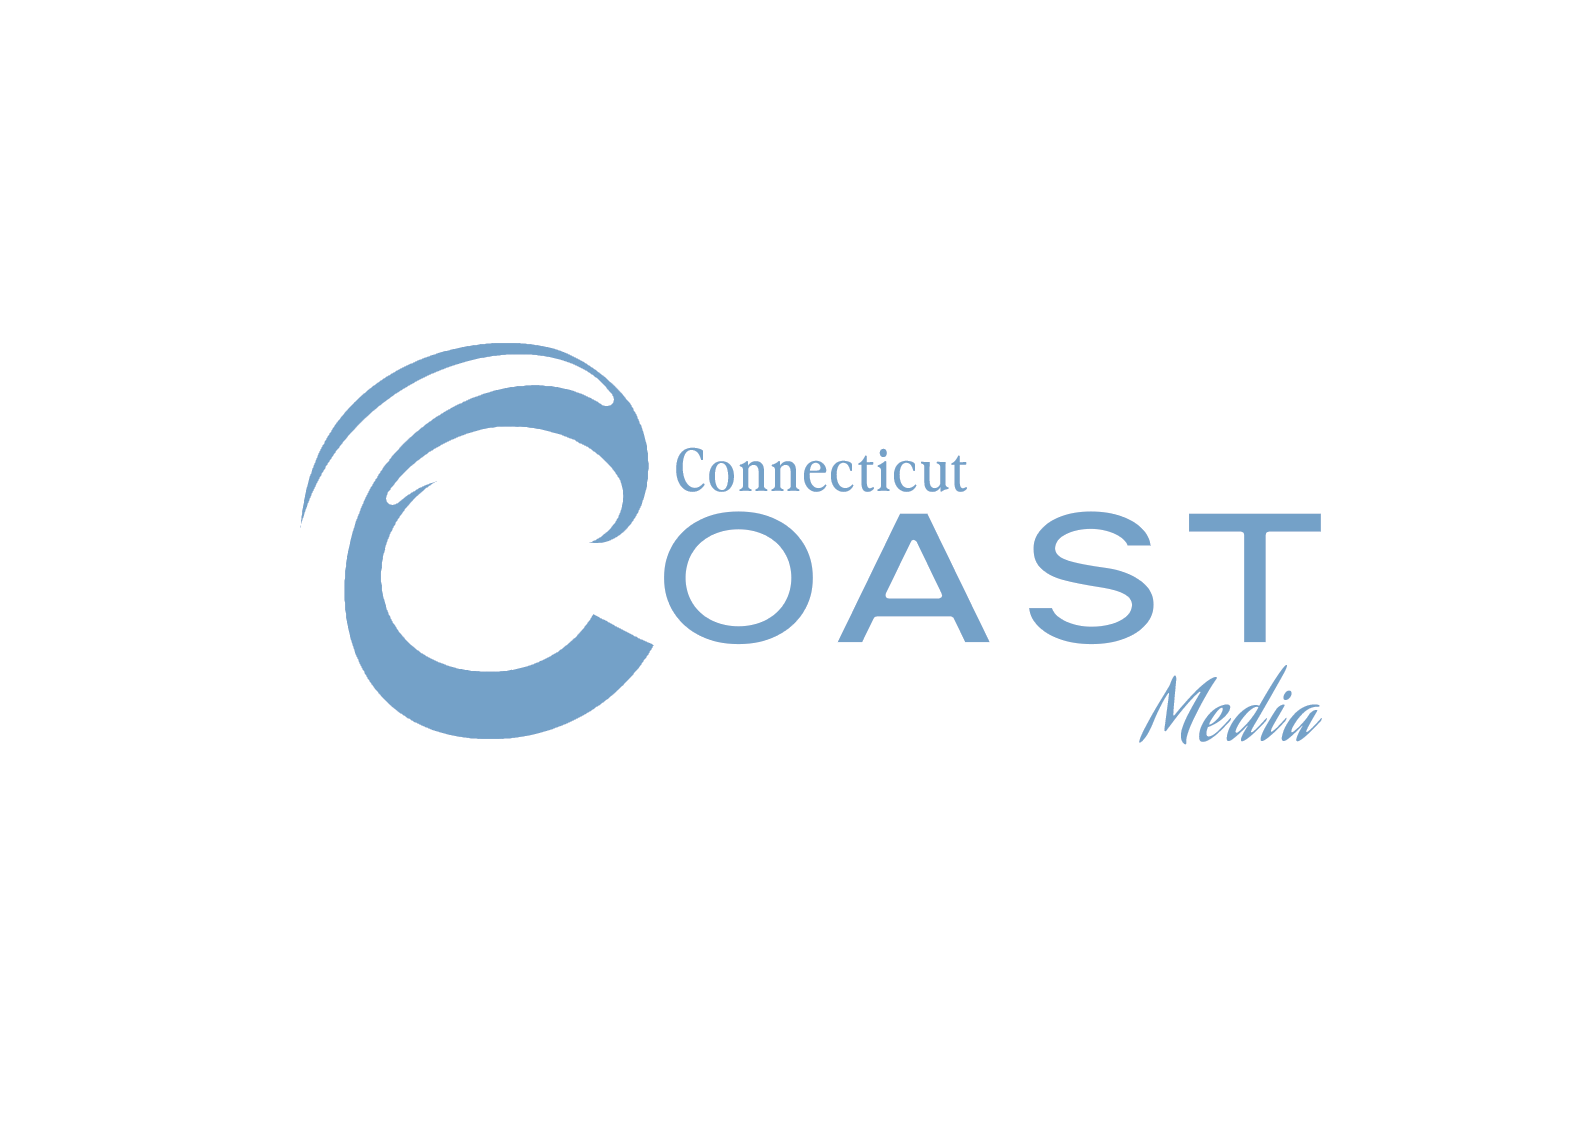 Connecticut Coast Media